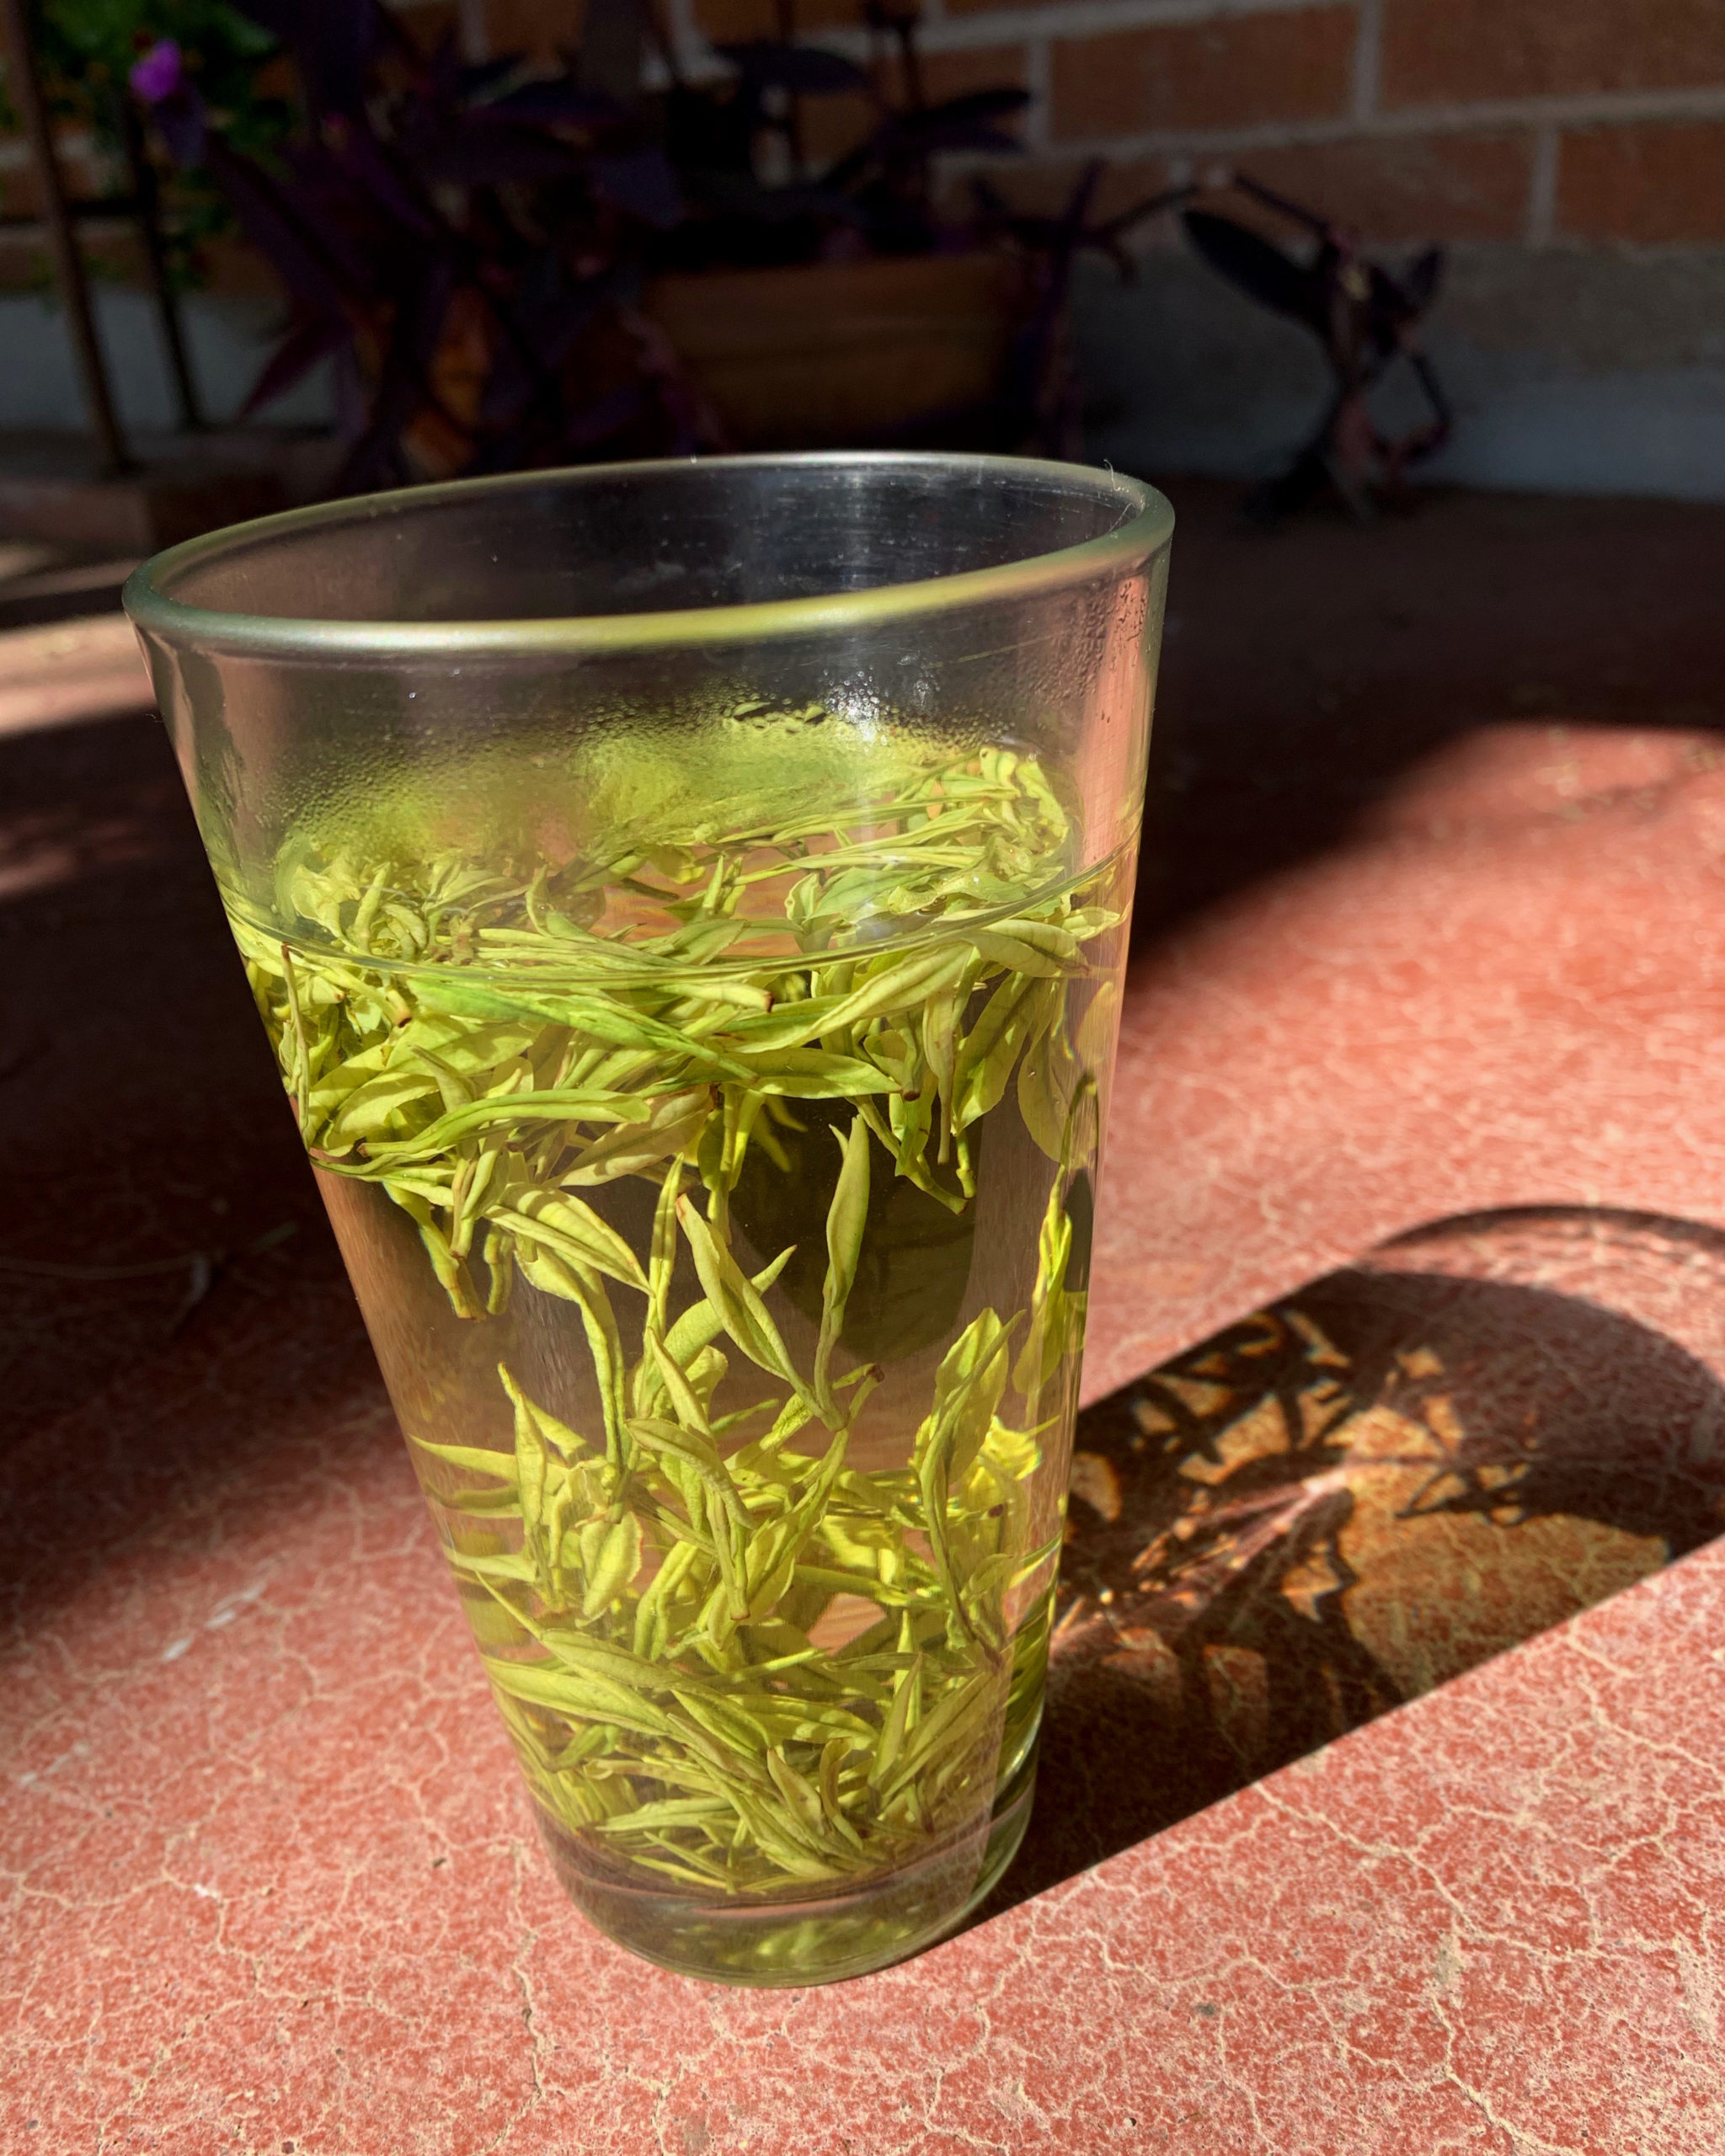 Anji Baicha green tea leaves floating in a tall sunlit glass, casting shadows.